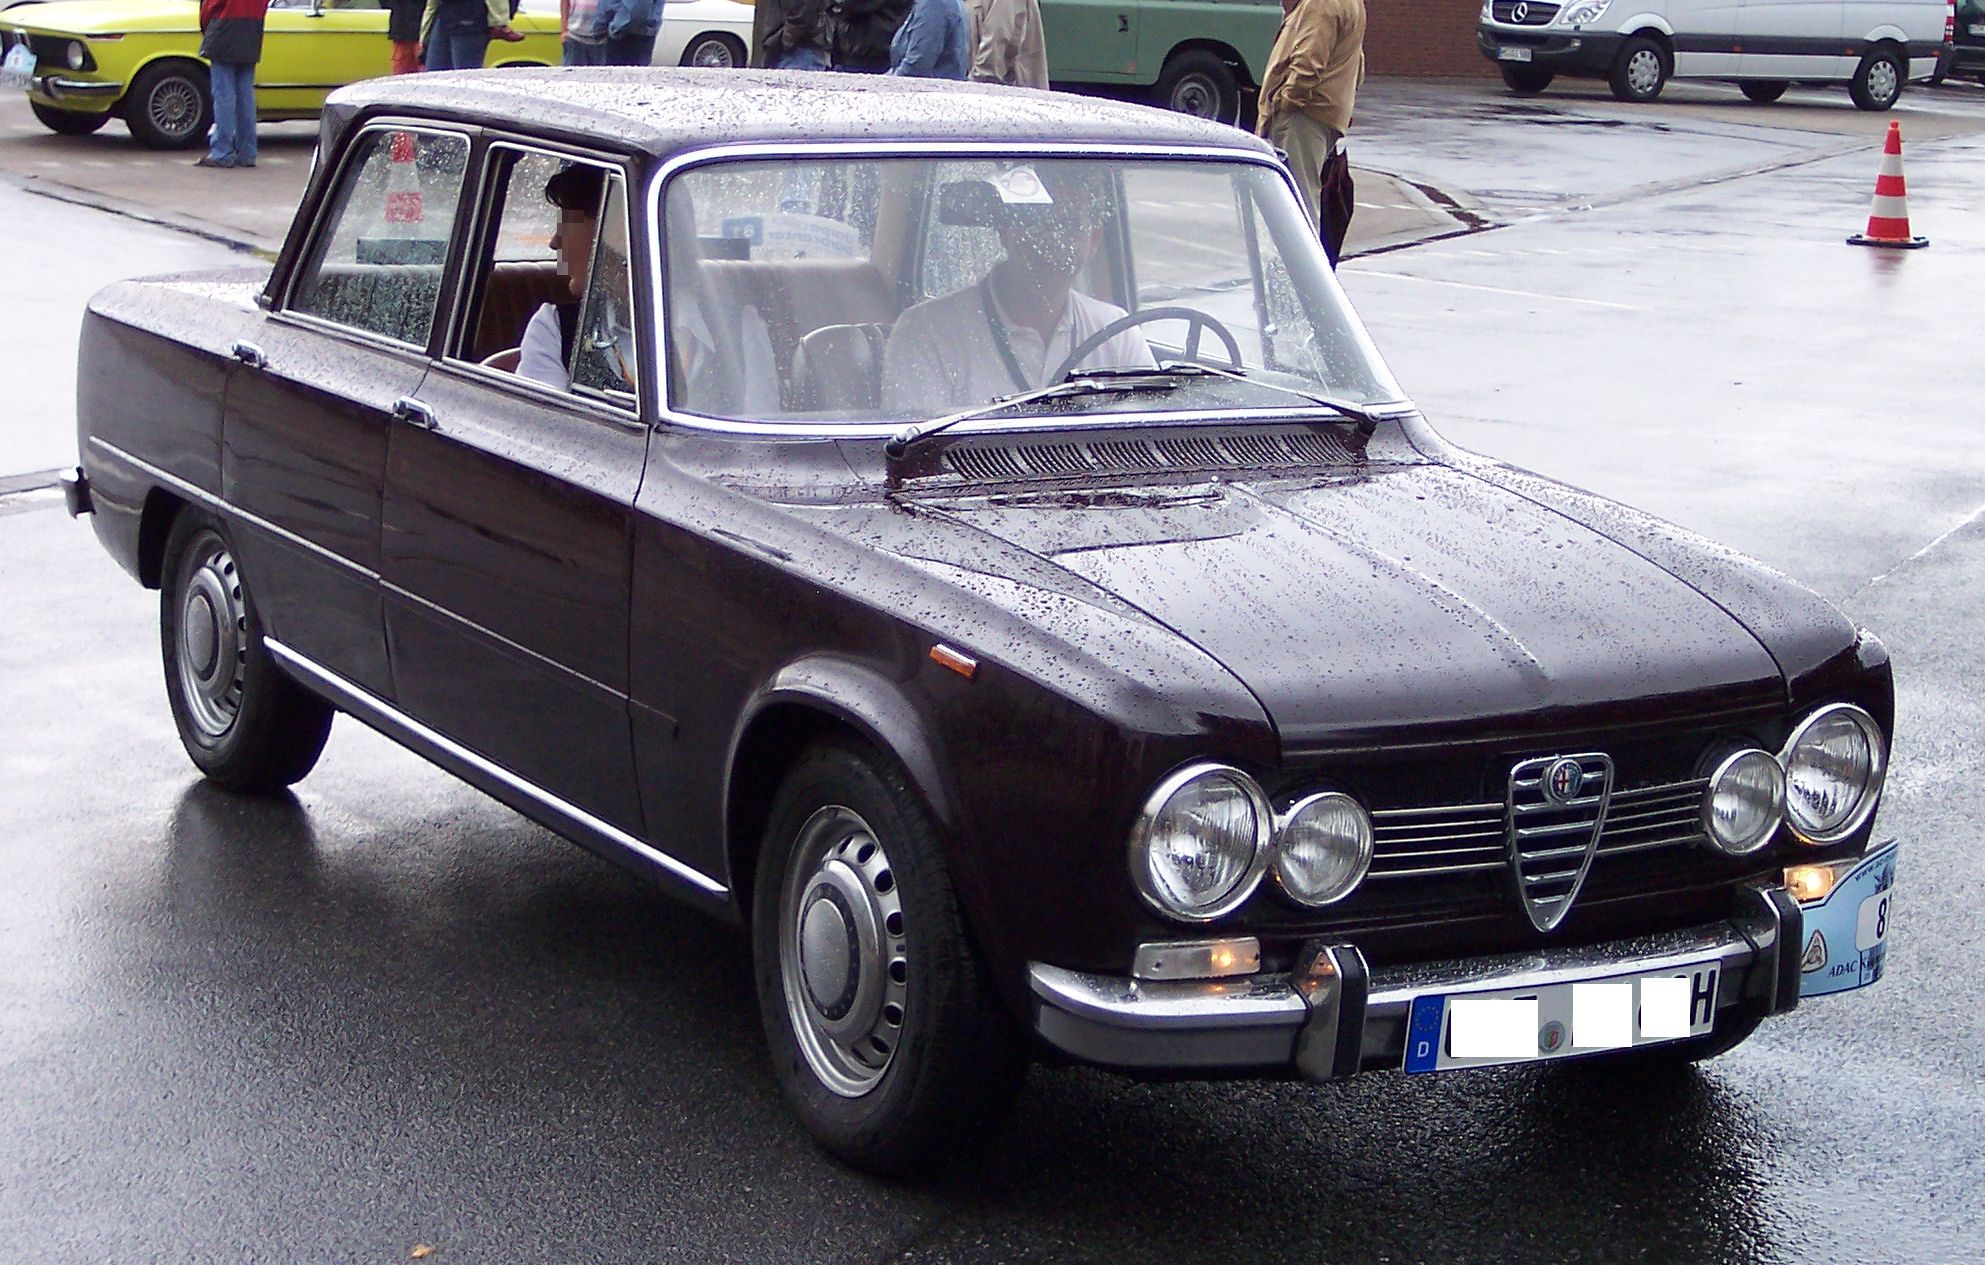 File:Alfa Romeo Giulia 1300 TI vr.jpg - Wikimedia Commons